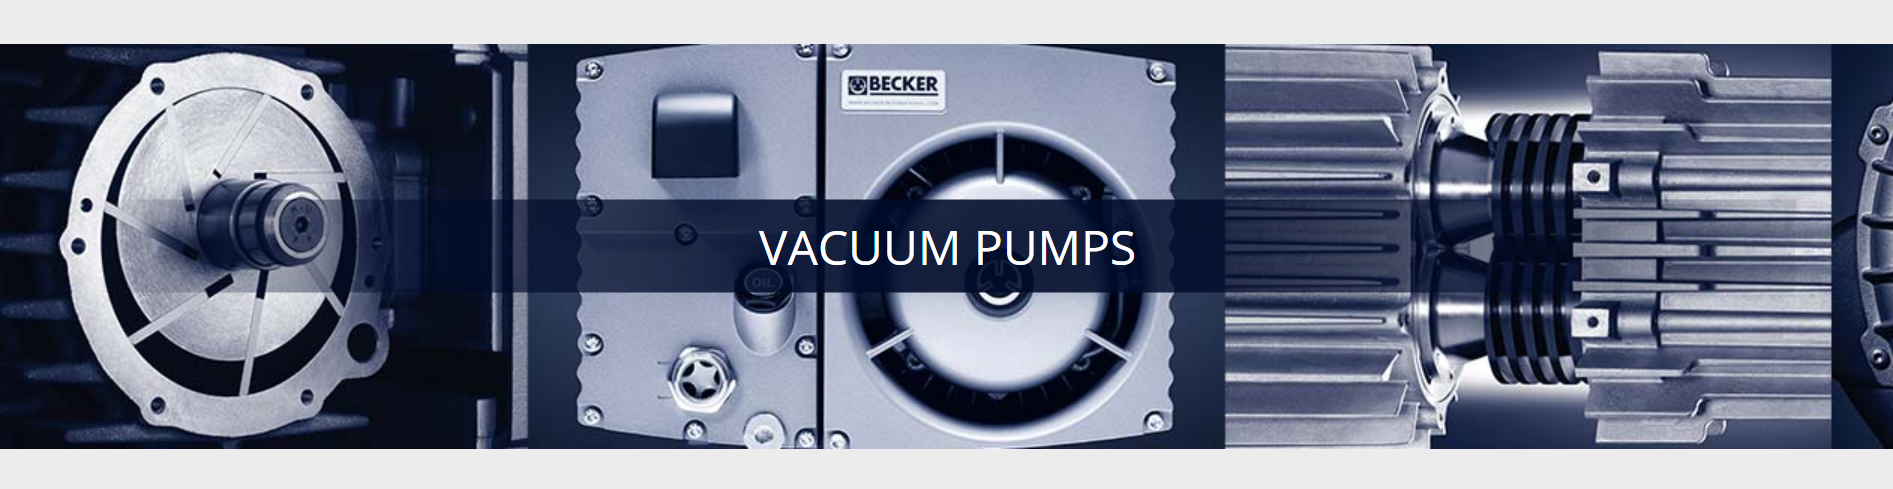 Becker industrial vacuum pumps.